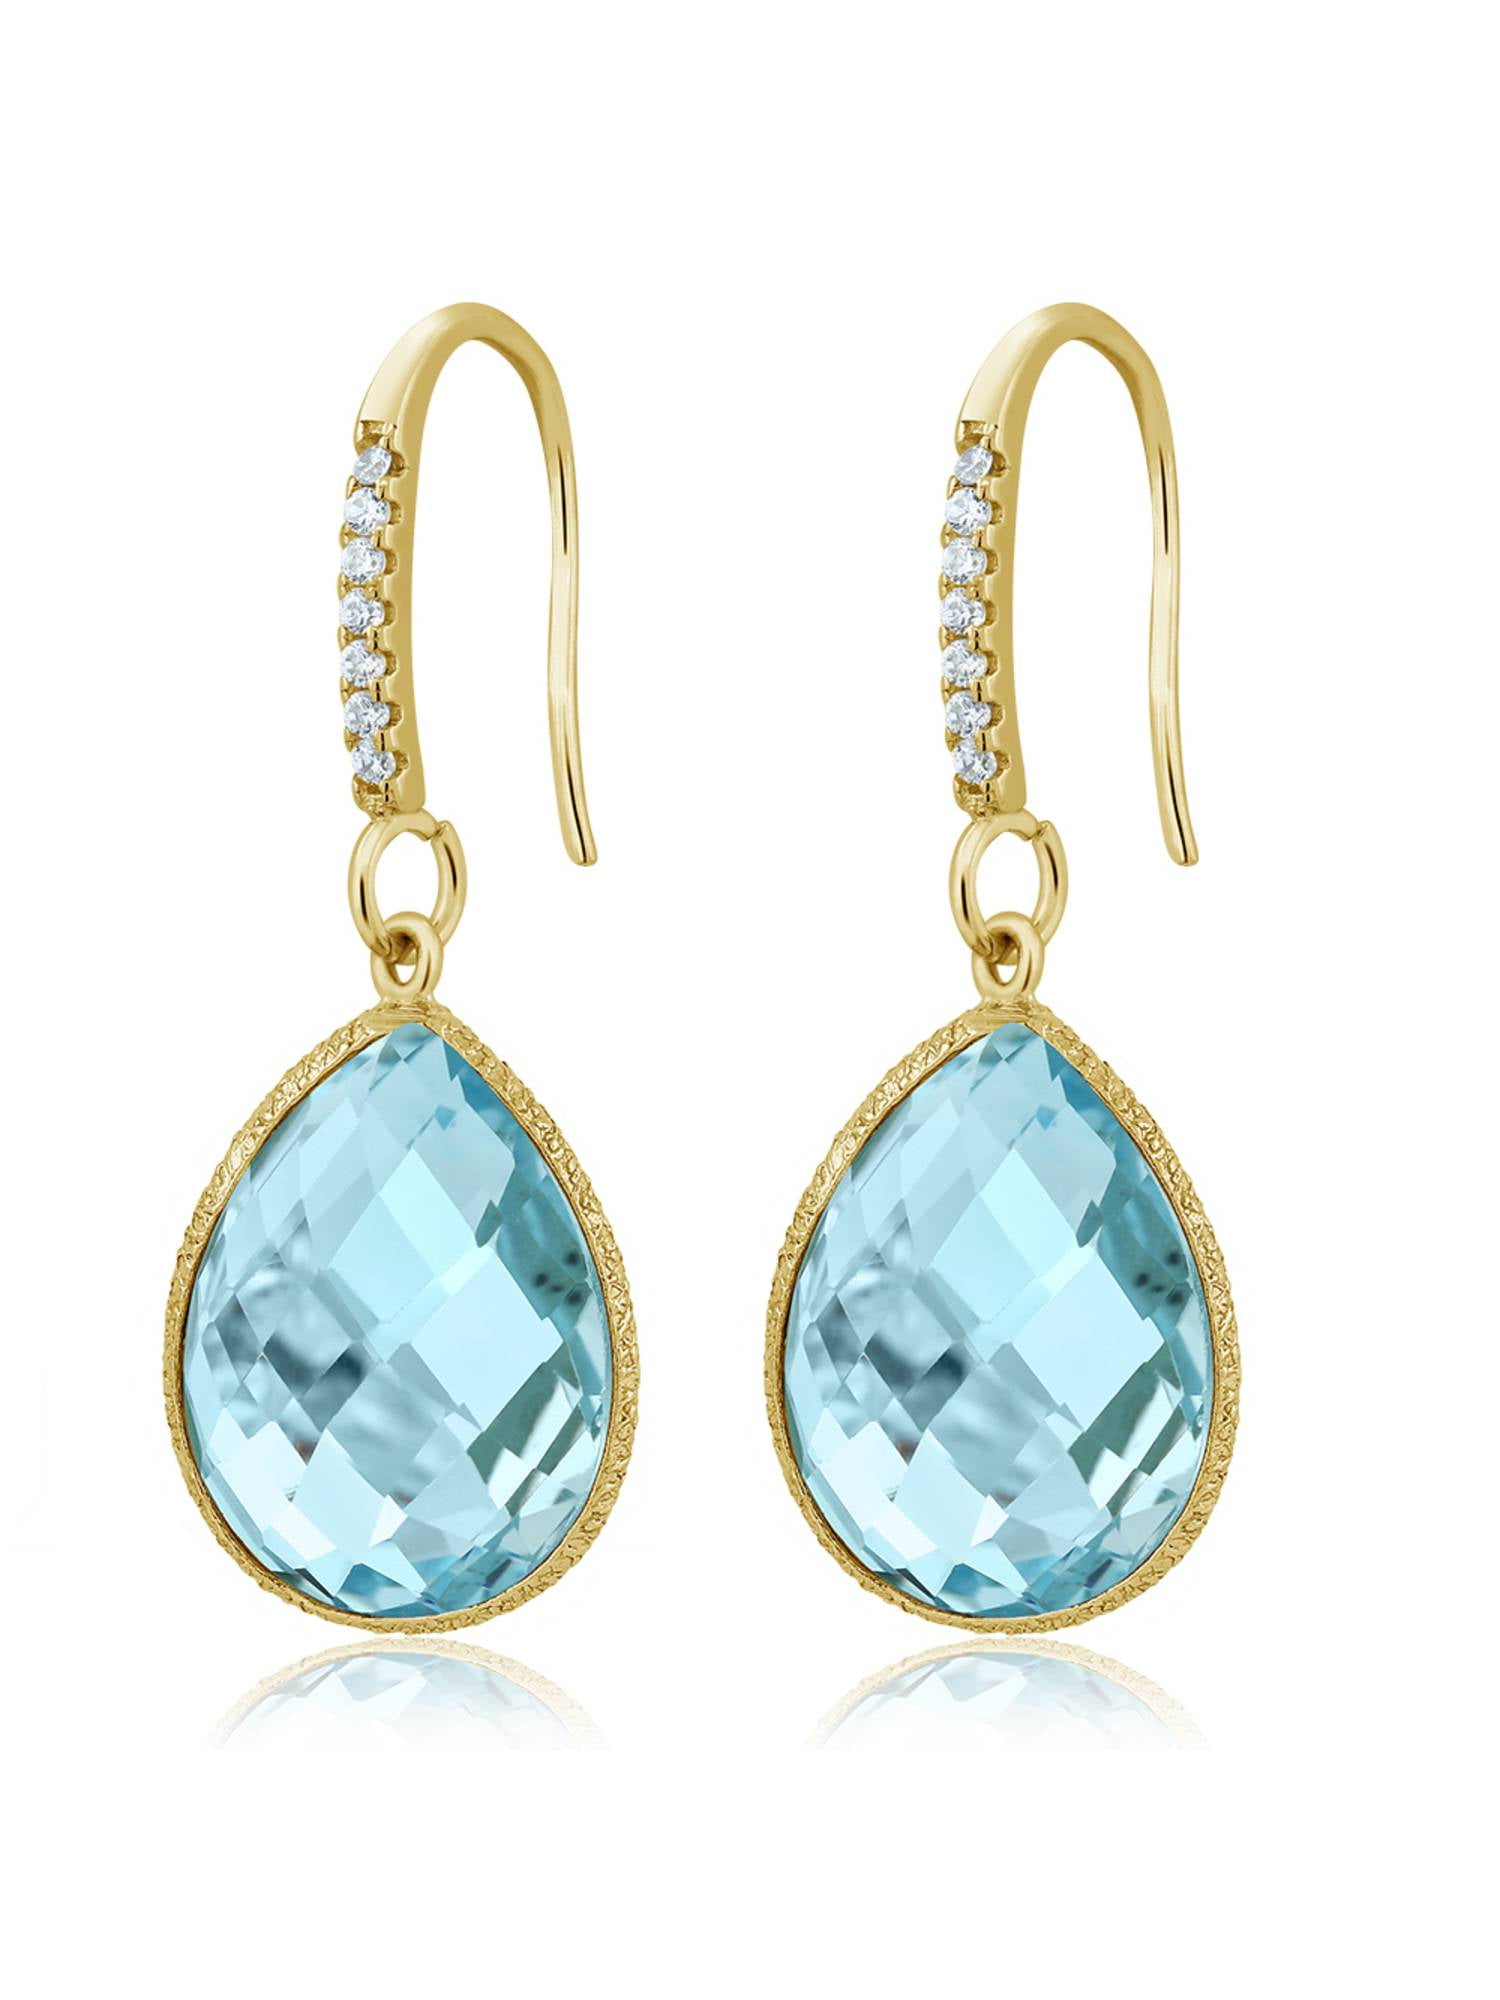 Gem Stone King 925 Sterling Silver Gold Plated Blue Topaz Dangle Earrings  For Women (18.00 Cttw, Gemstone Birthstone, Pear Shape 16X12MM)